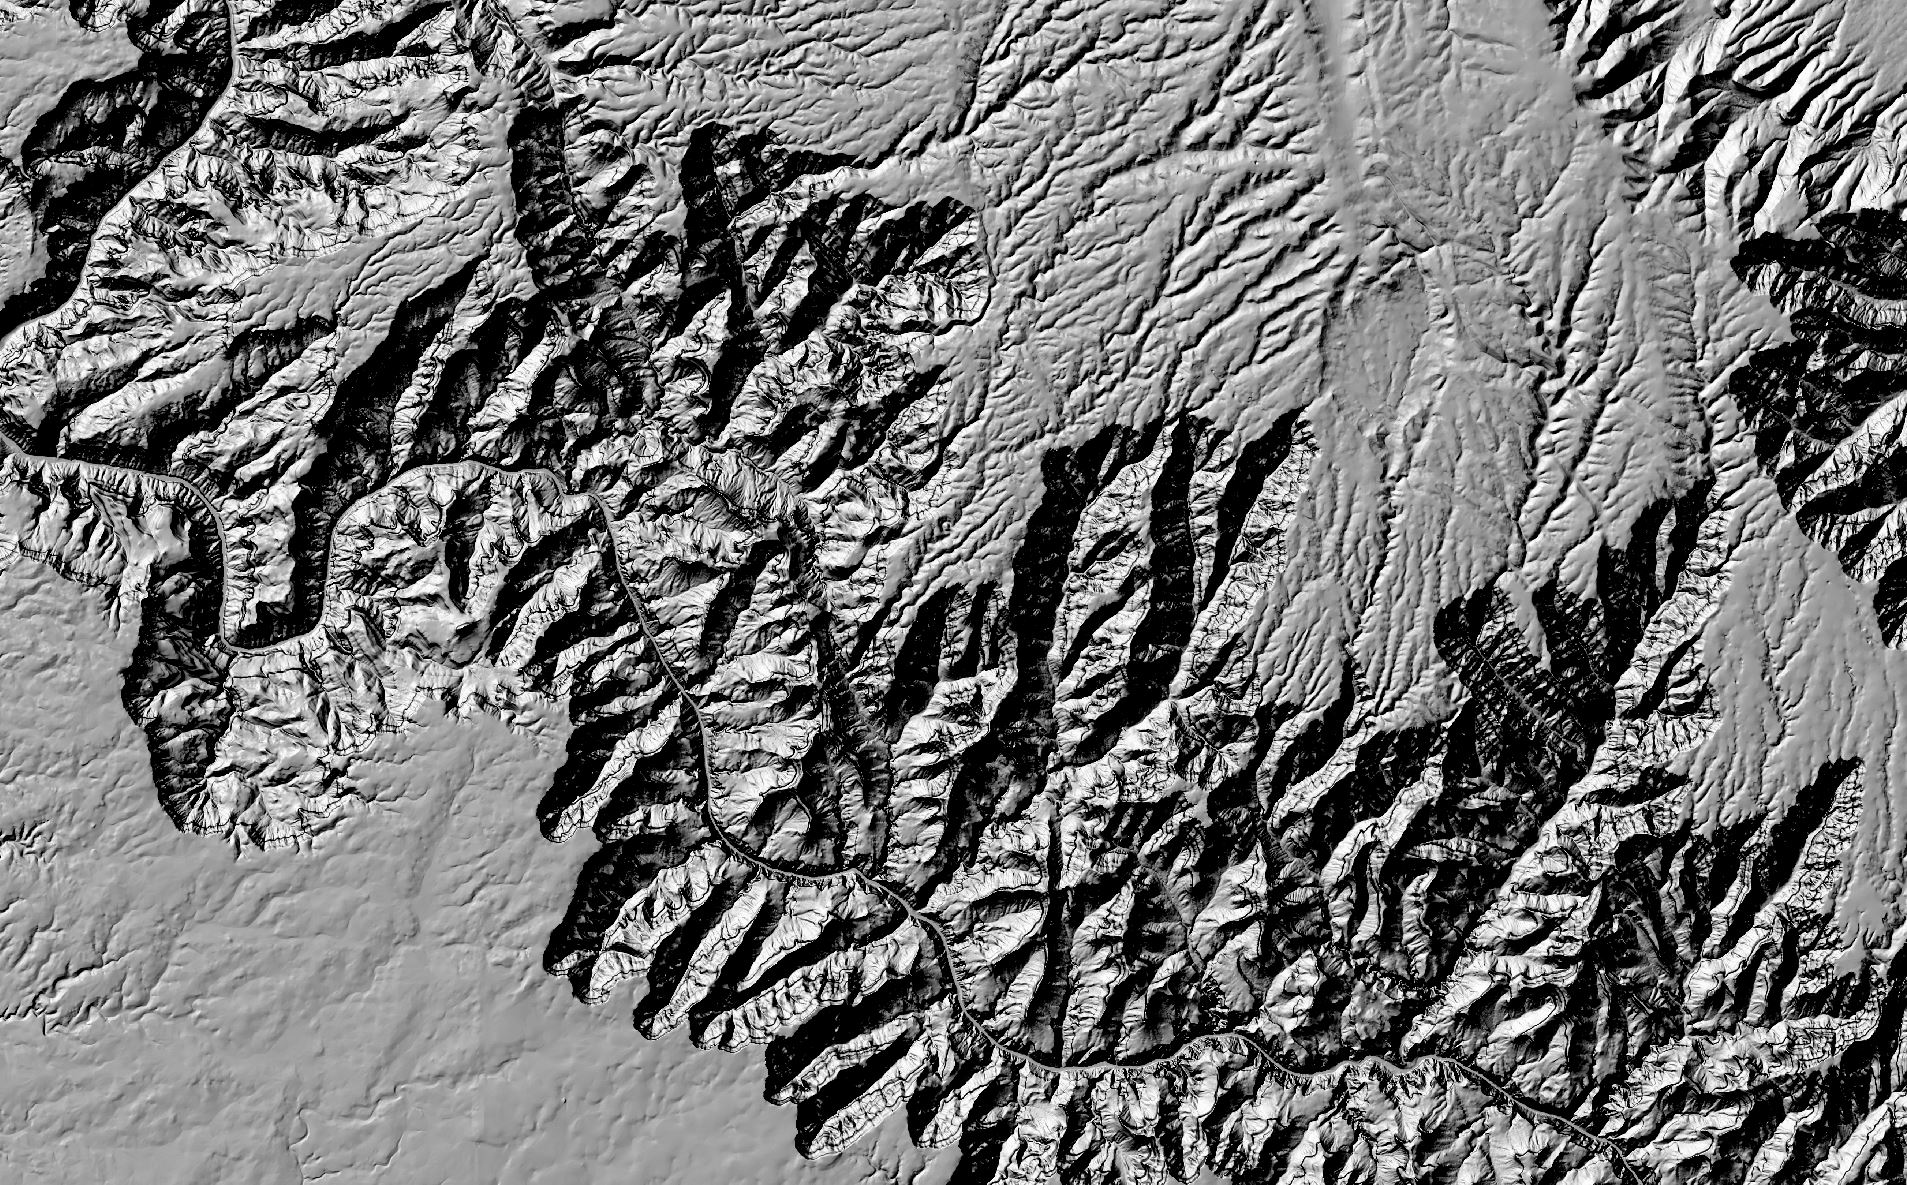 Grand Canyon Digital Elevation Model